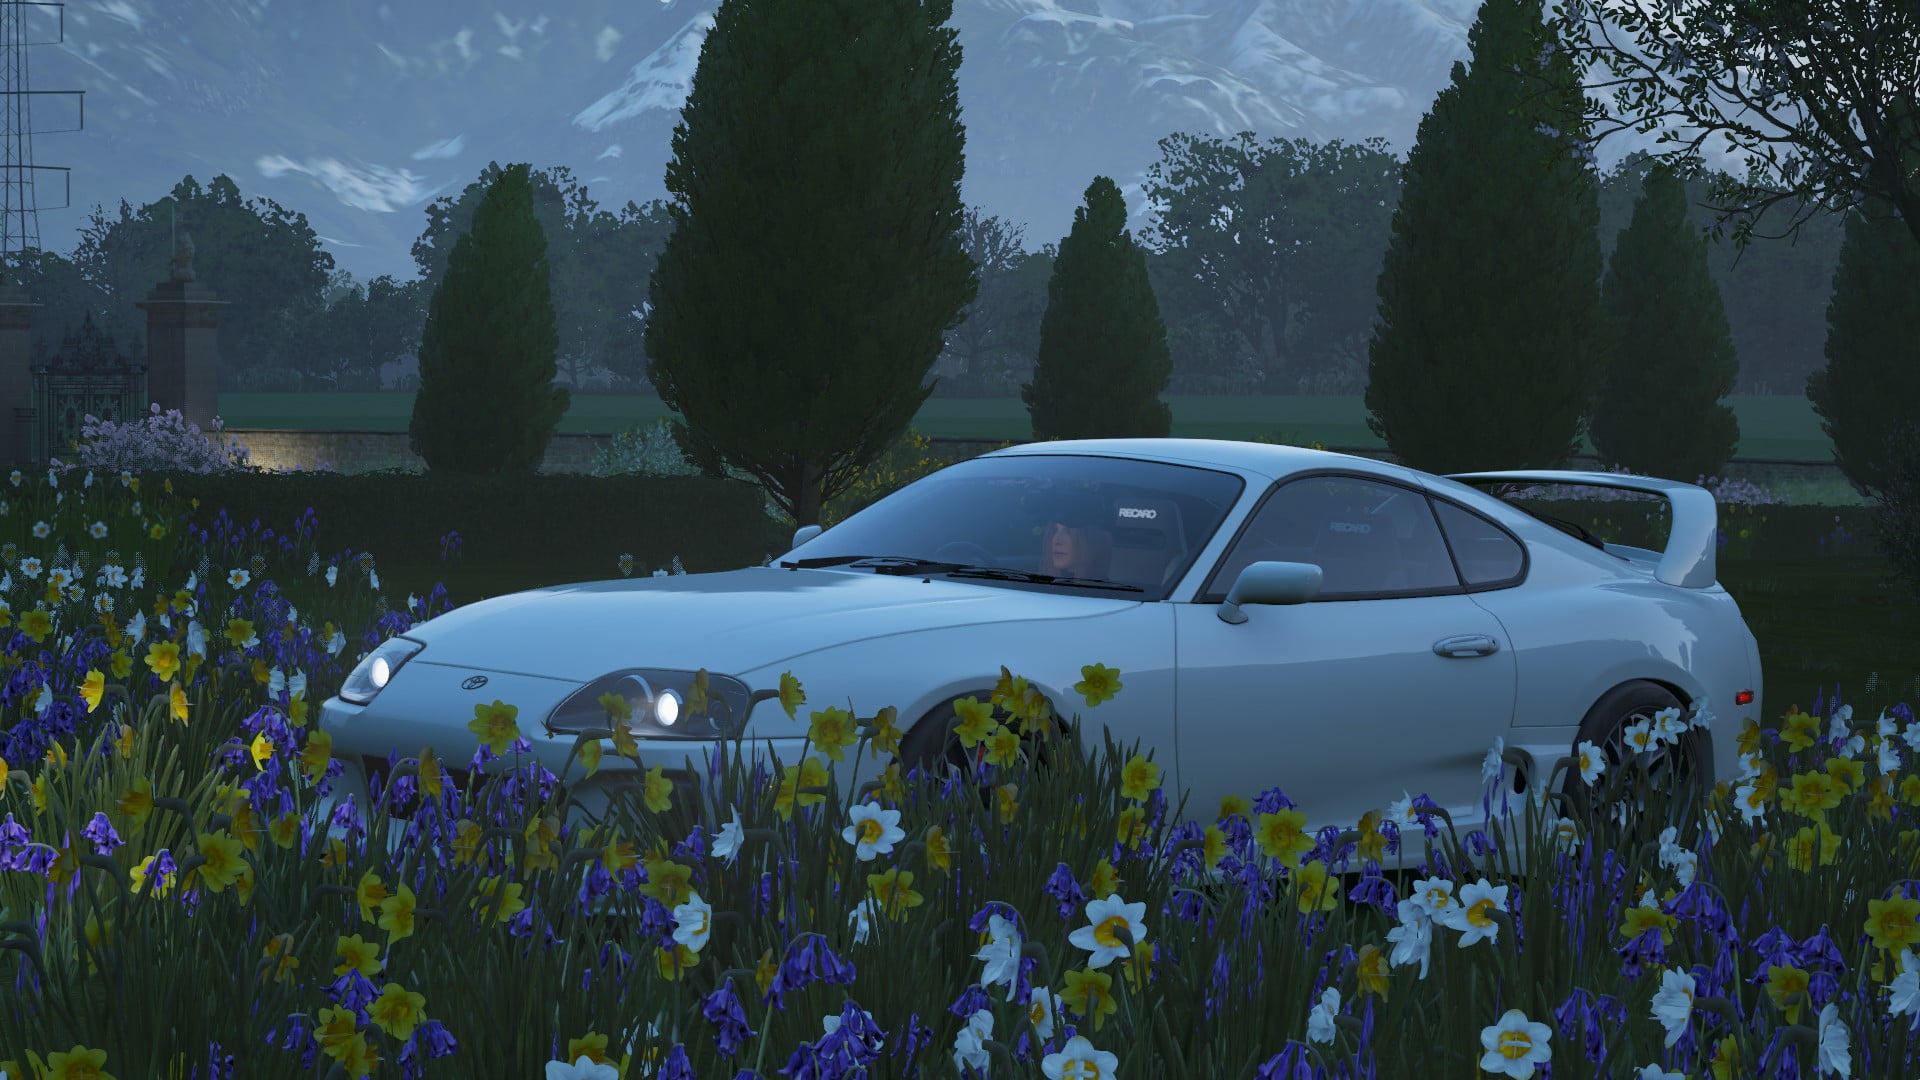 CGI, digital art, motion blur, vehicle, car, Forza, Forza Horizon 4